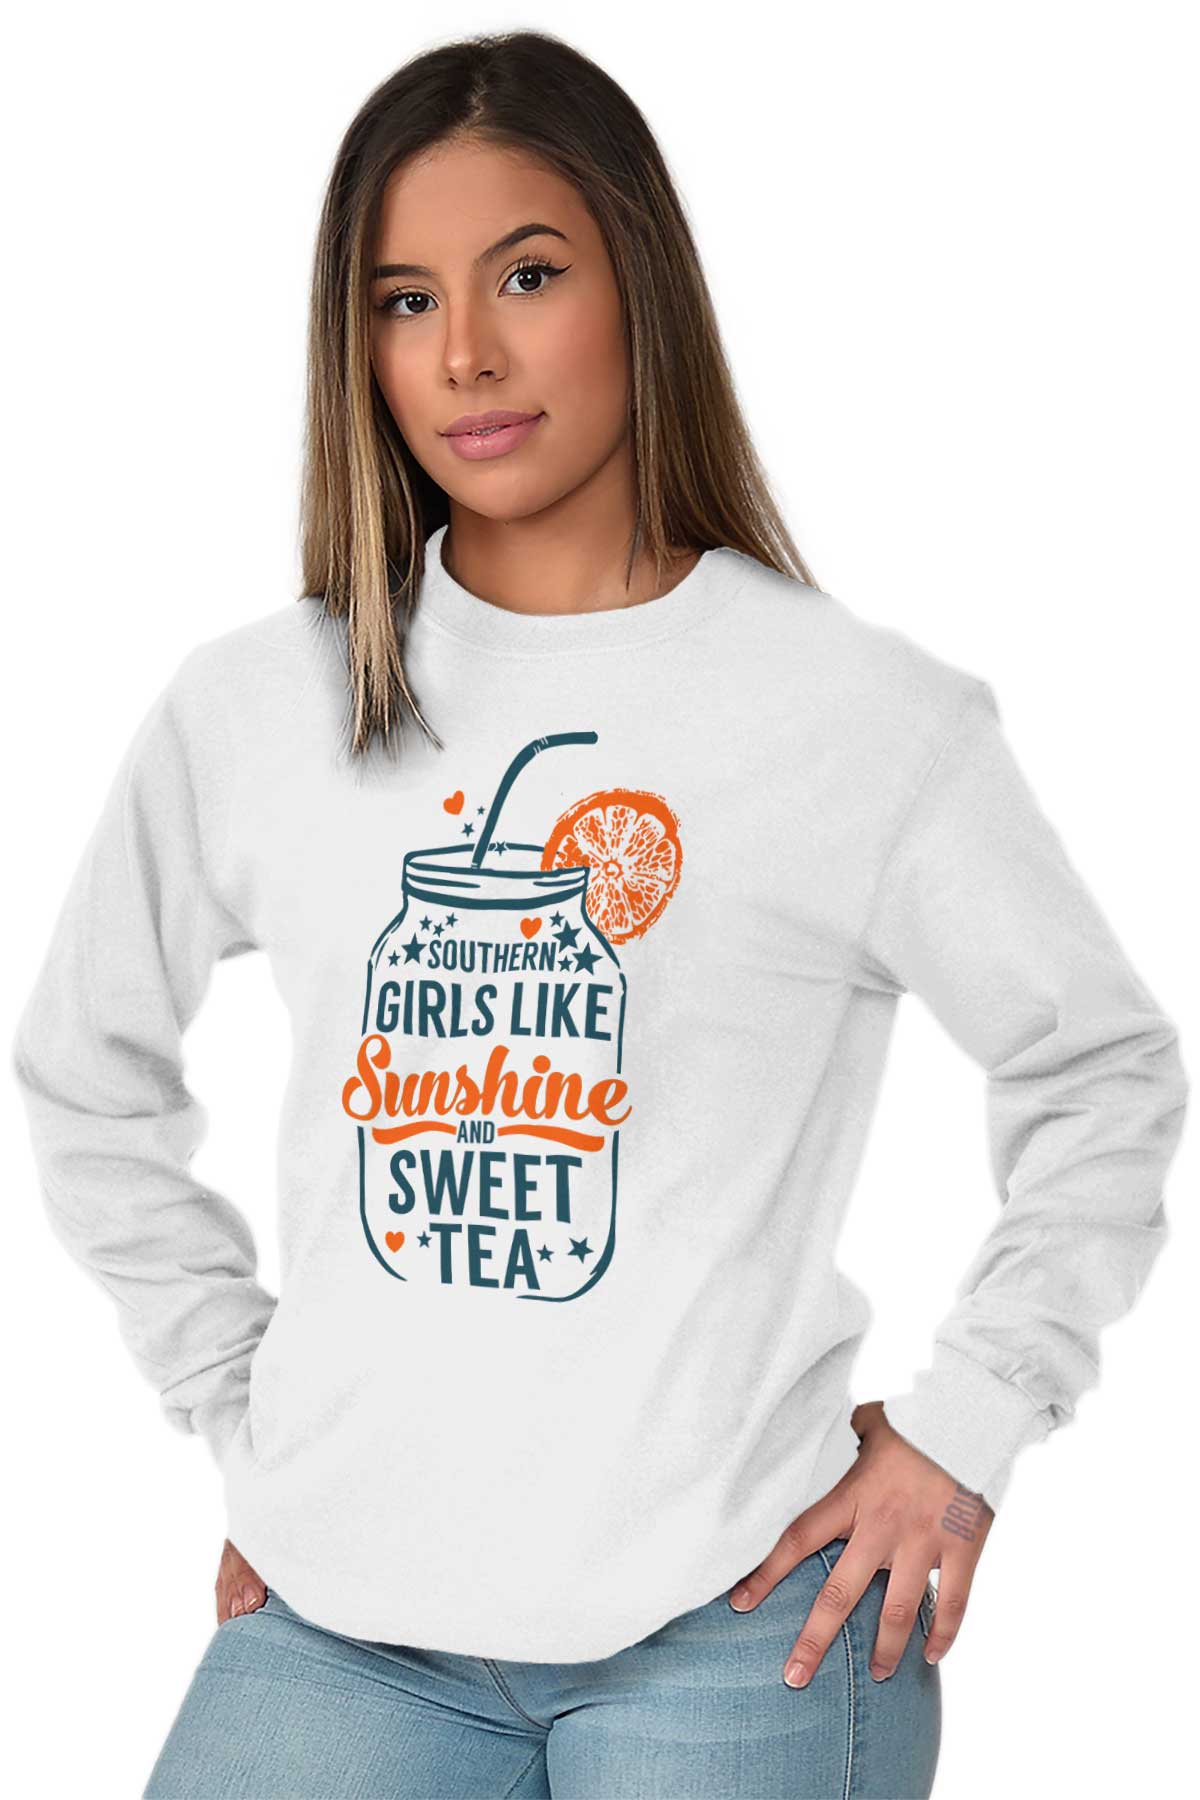 Sunshine and Sweet Tea T-shirt, Birthday Gifts, Tea Graphic Tshirt